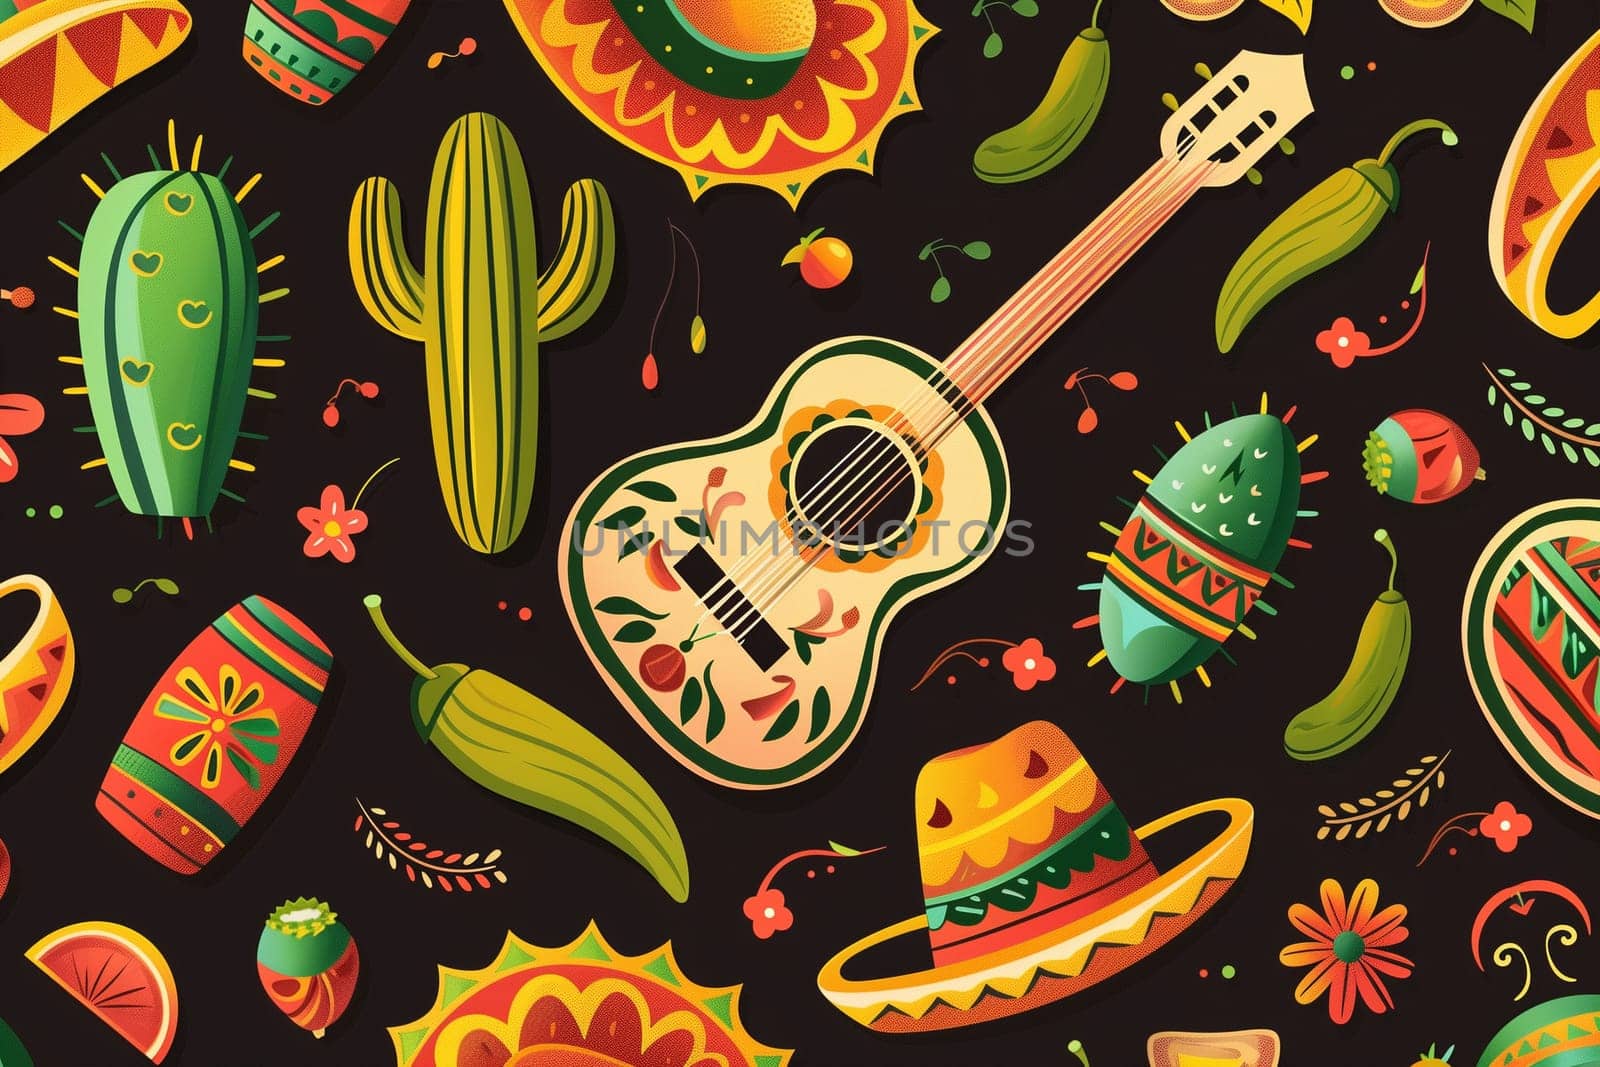 A guitar, cactus, and sombrero arranged on a black background, symbolizing Cinco de Mayo celebrations.